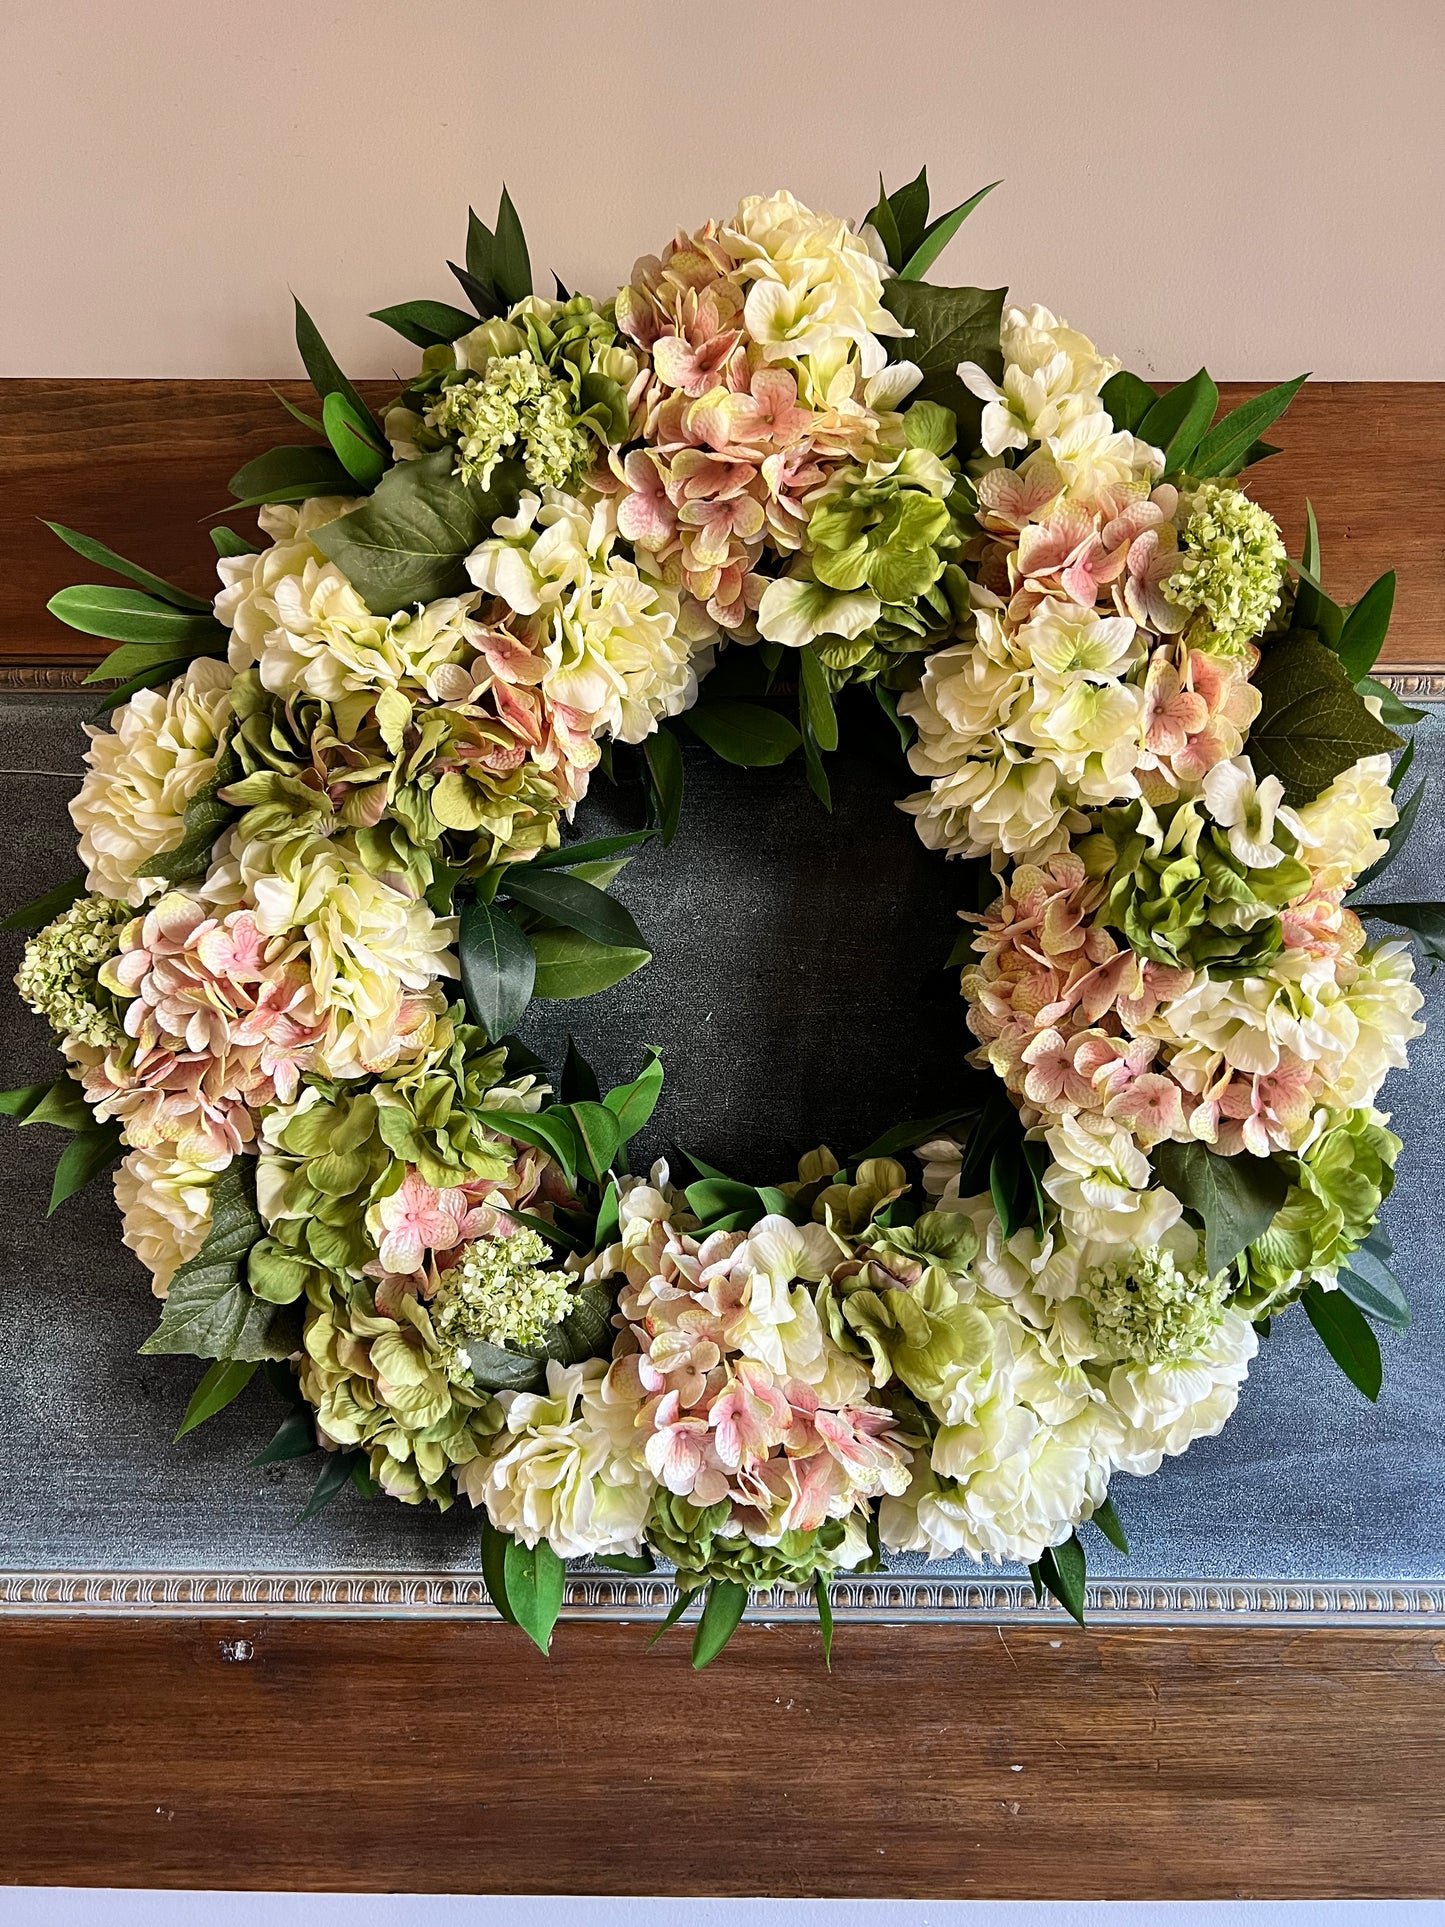 Snowball Hydrangea Wreath